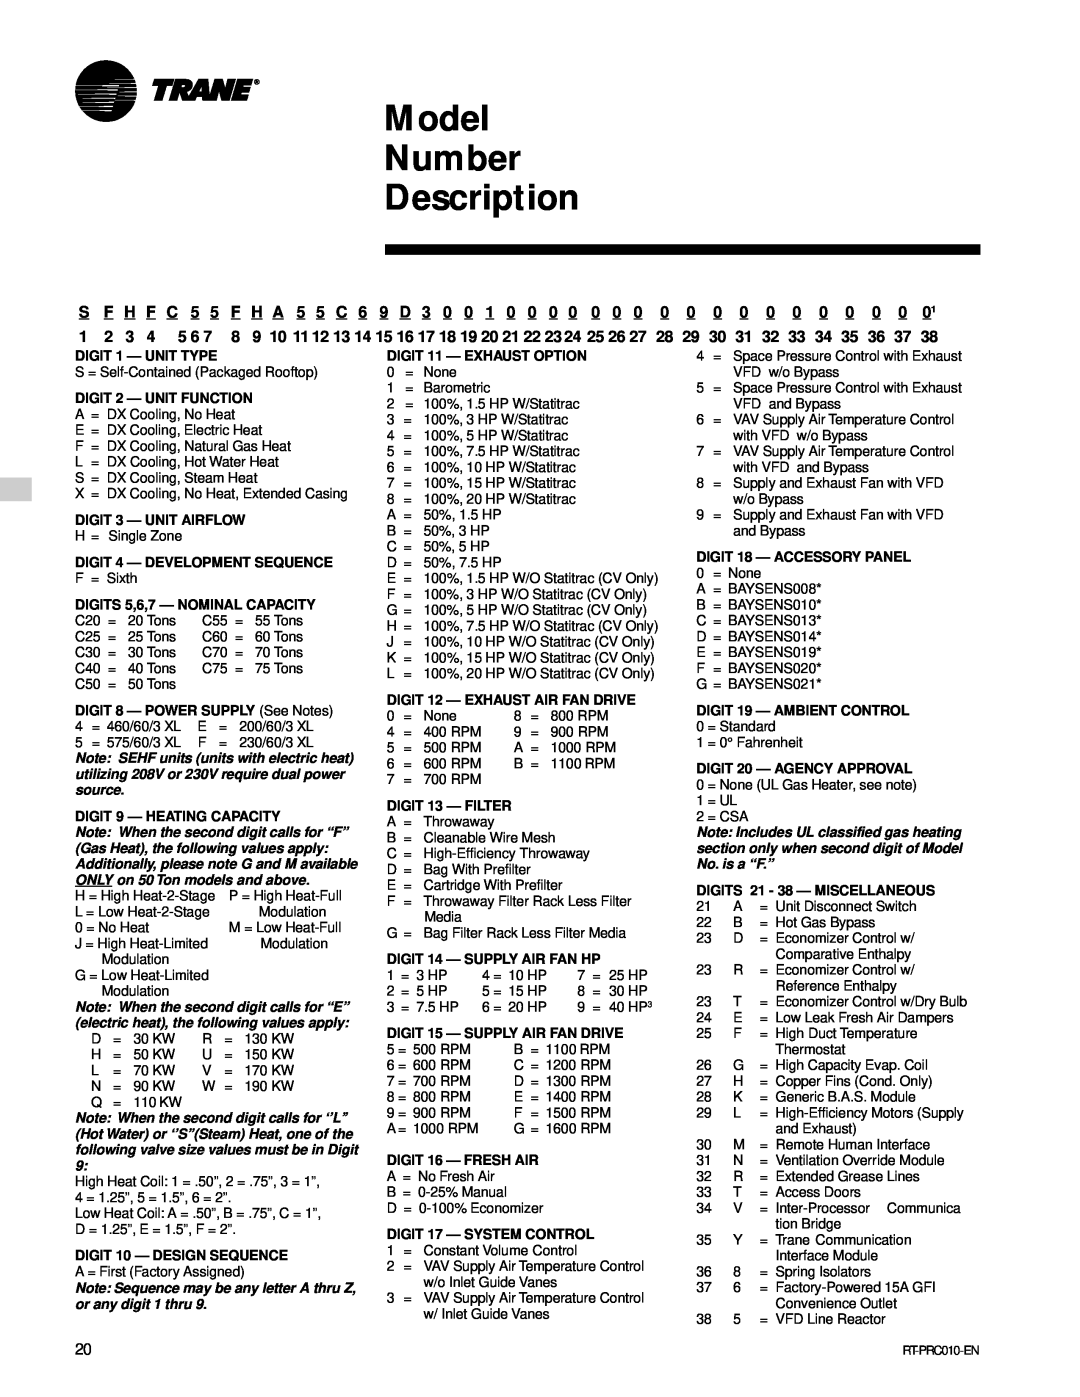 Trane RT-PRC010-EN manual Model Number Description, S F H F C 